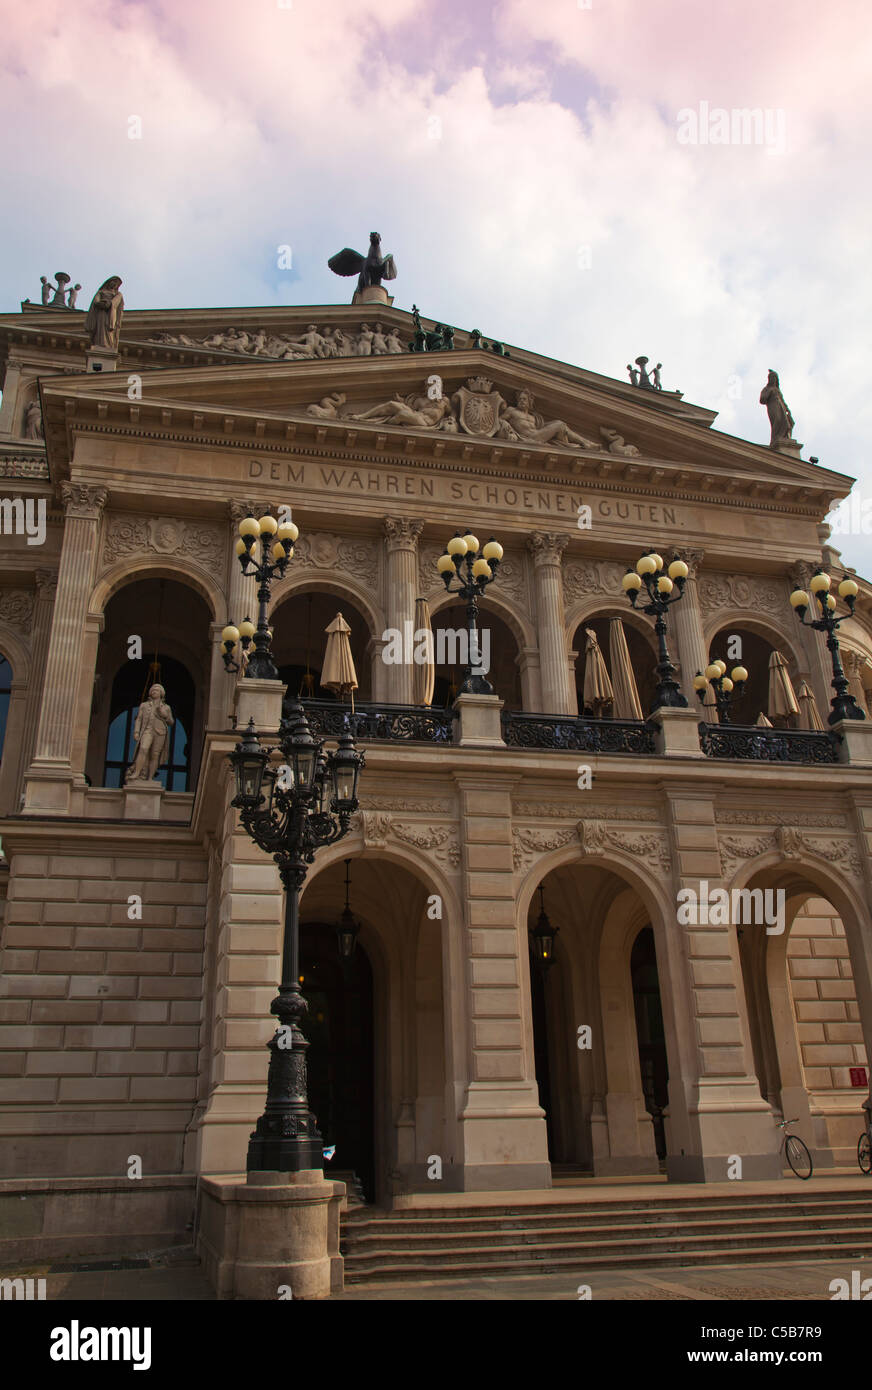 Alte Oper old opera house Frankfurt Germany Stock Photo